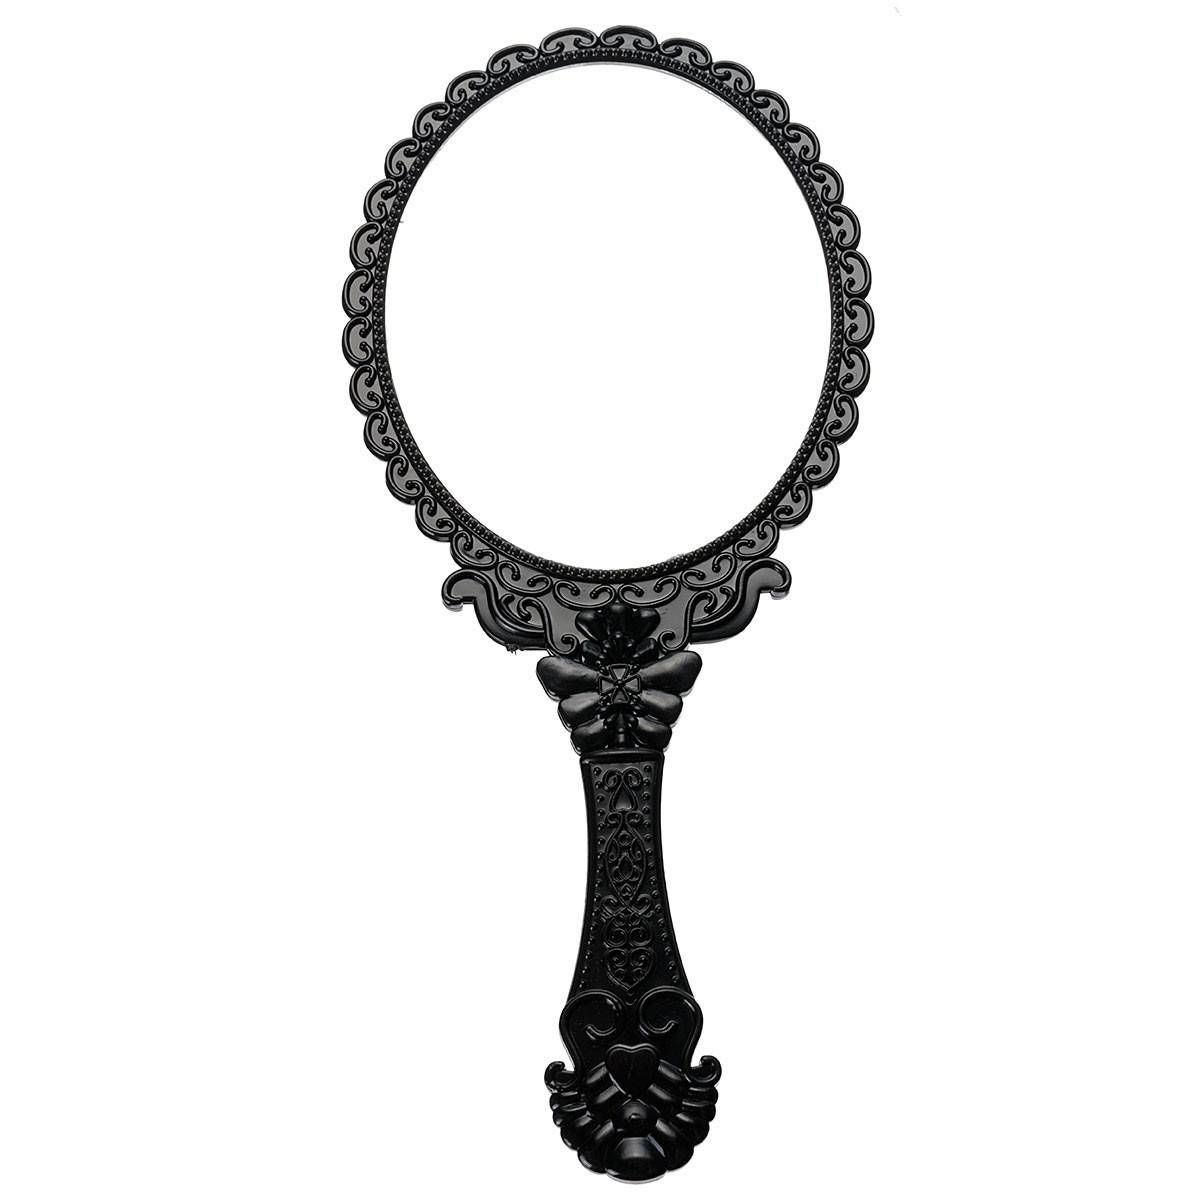 Black Floral Repousse Vintage Mirror Oval Hand Held Makeup Beauty Regarding Black Vintage Mirrors (View 10 of 15)